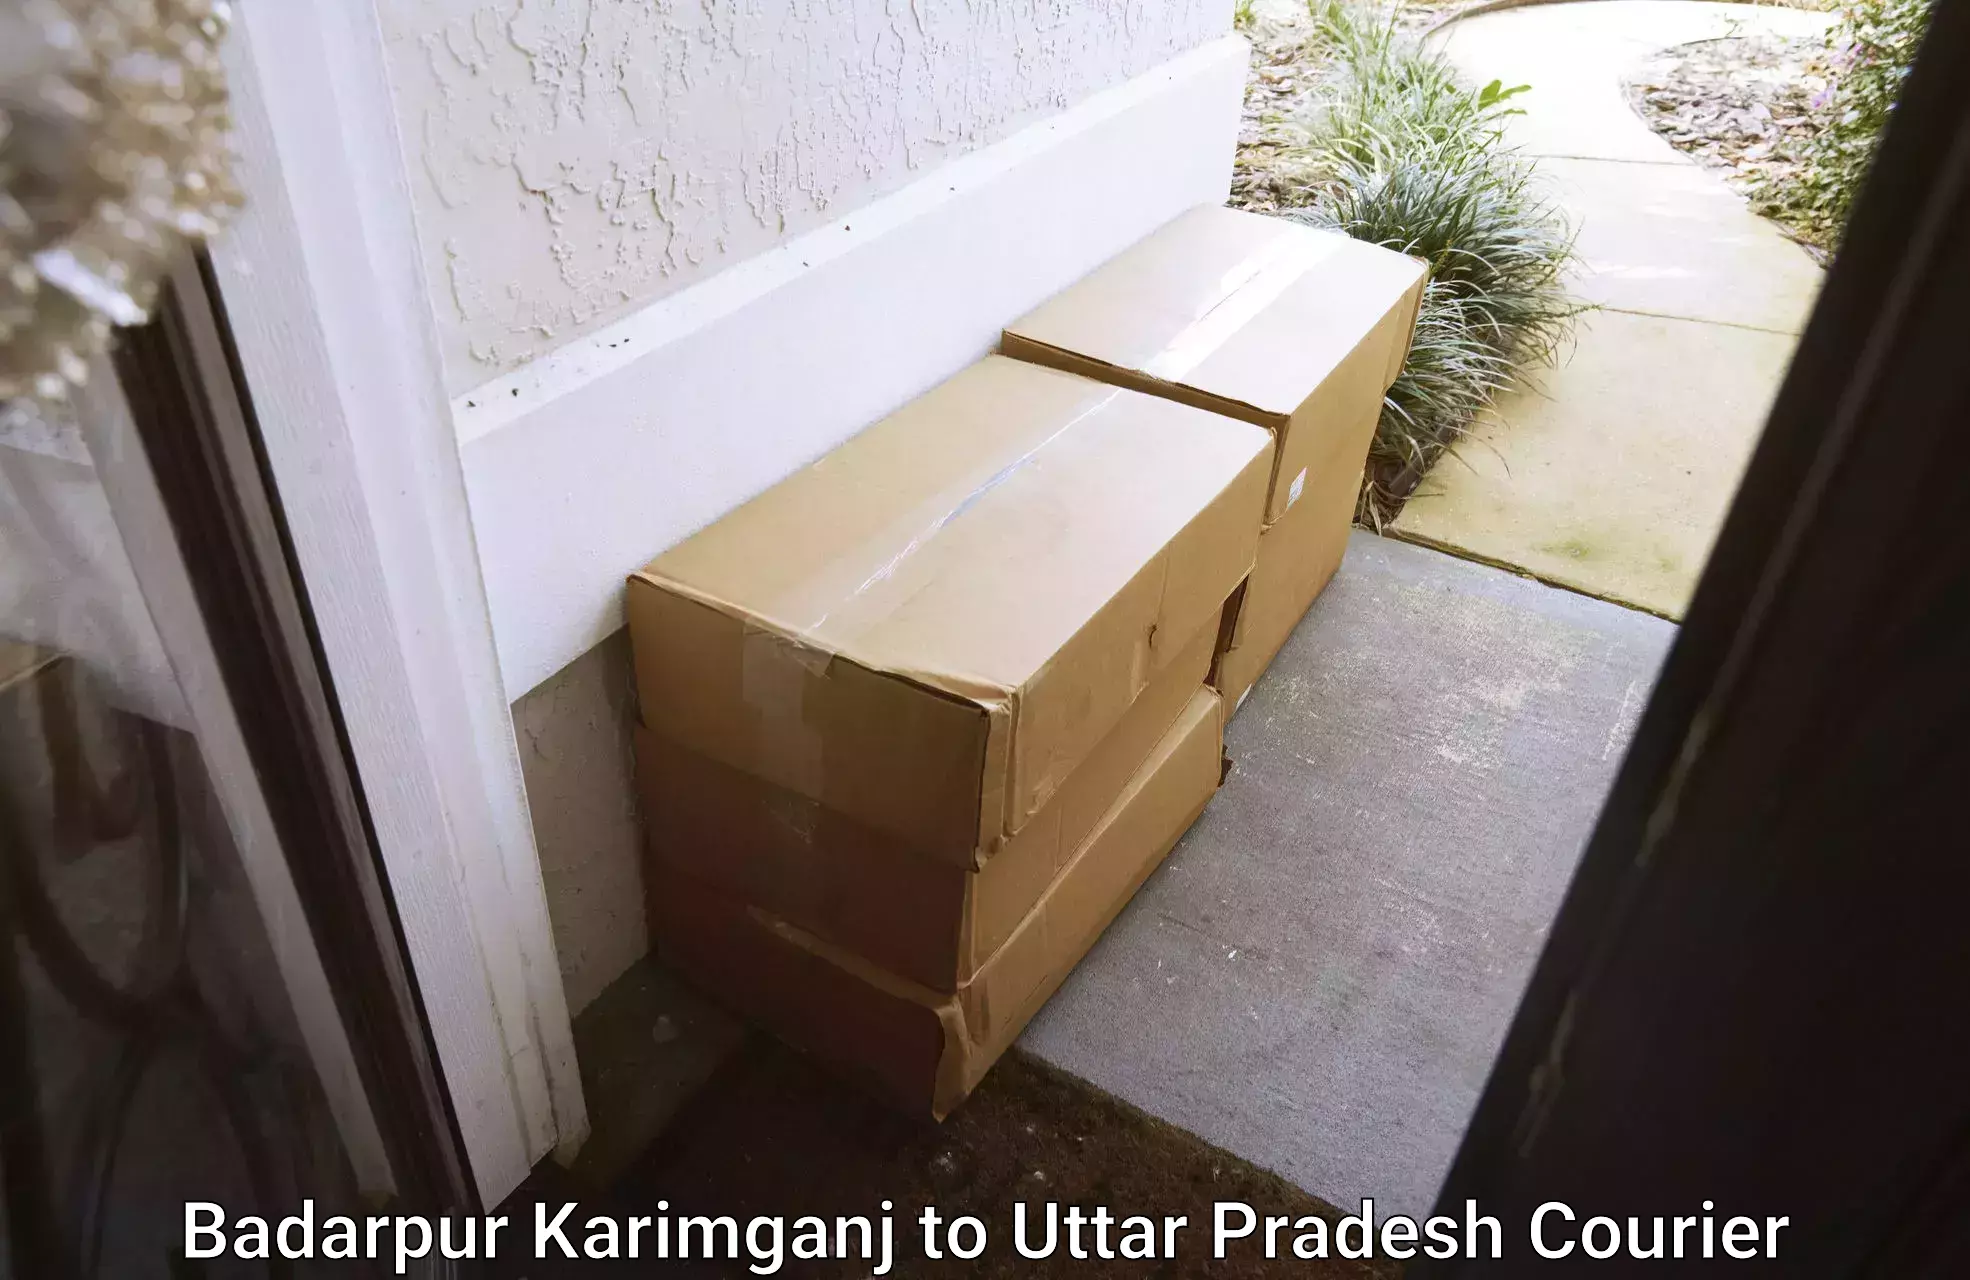 Courier service partnerships Badarpur Karimganj to Chandpur